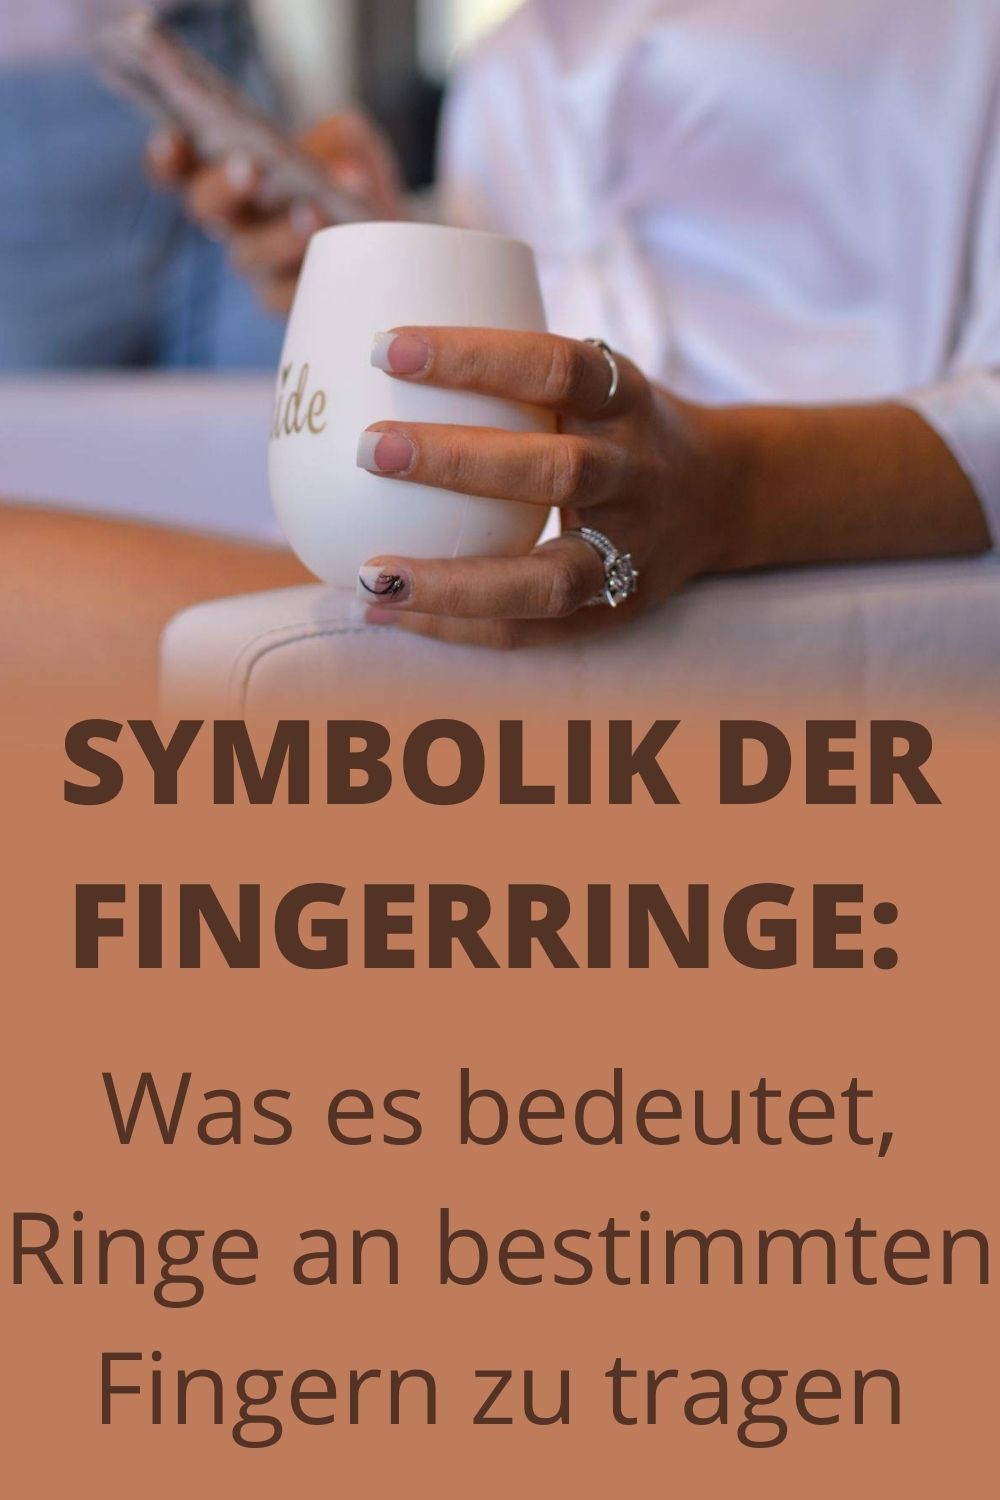 An bedeutet finger ring was welchem Was bedeutet